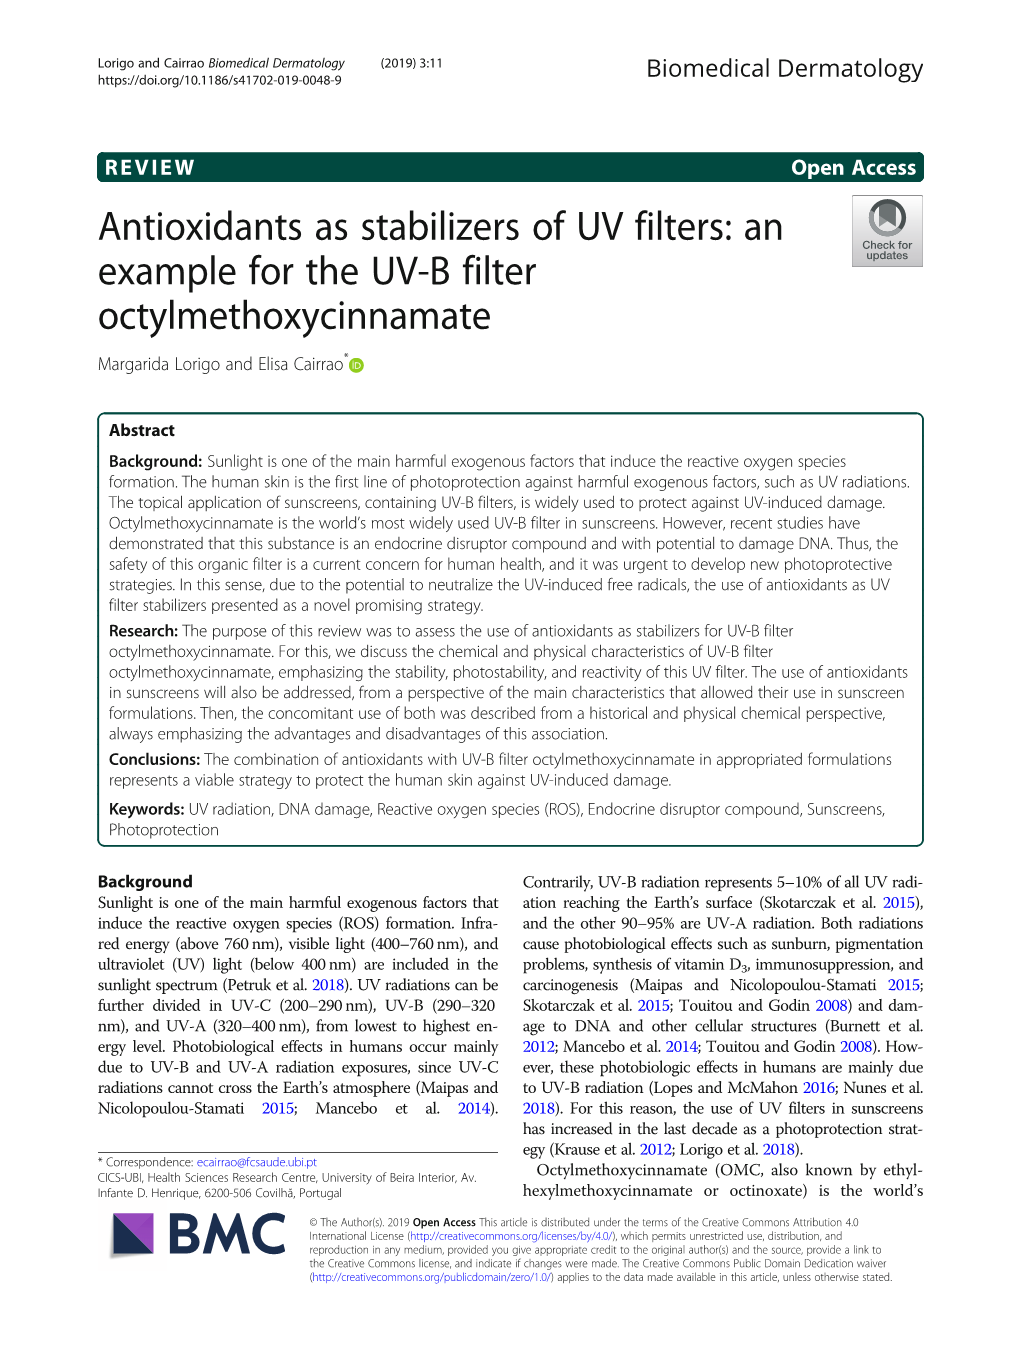 Antioxidants As Stabilizers of UV Filters: an Example for the UV-B Filter Octylmethoxycinnamate Margarida Lorigo and Elisa Cairrao*